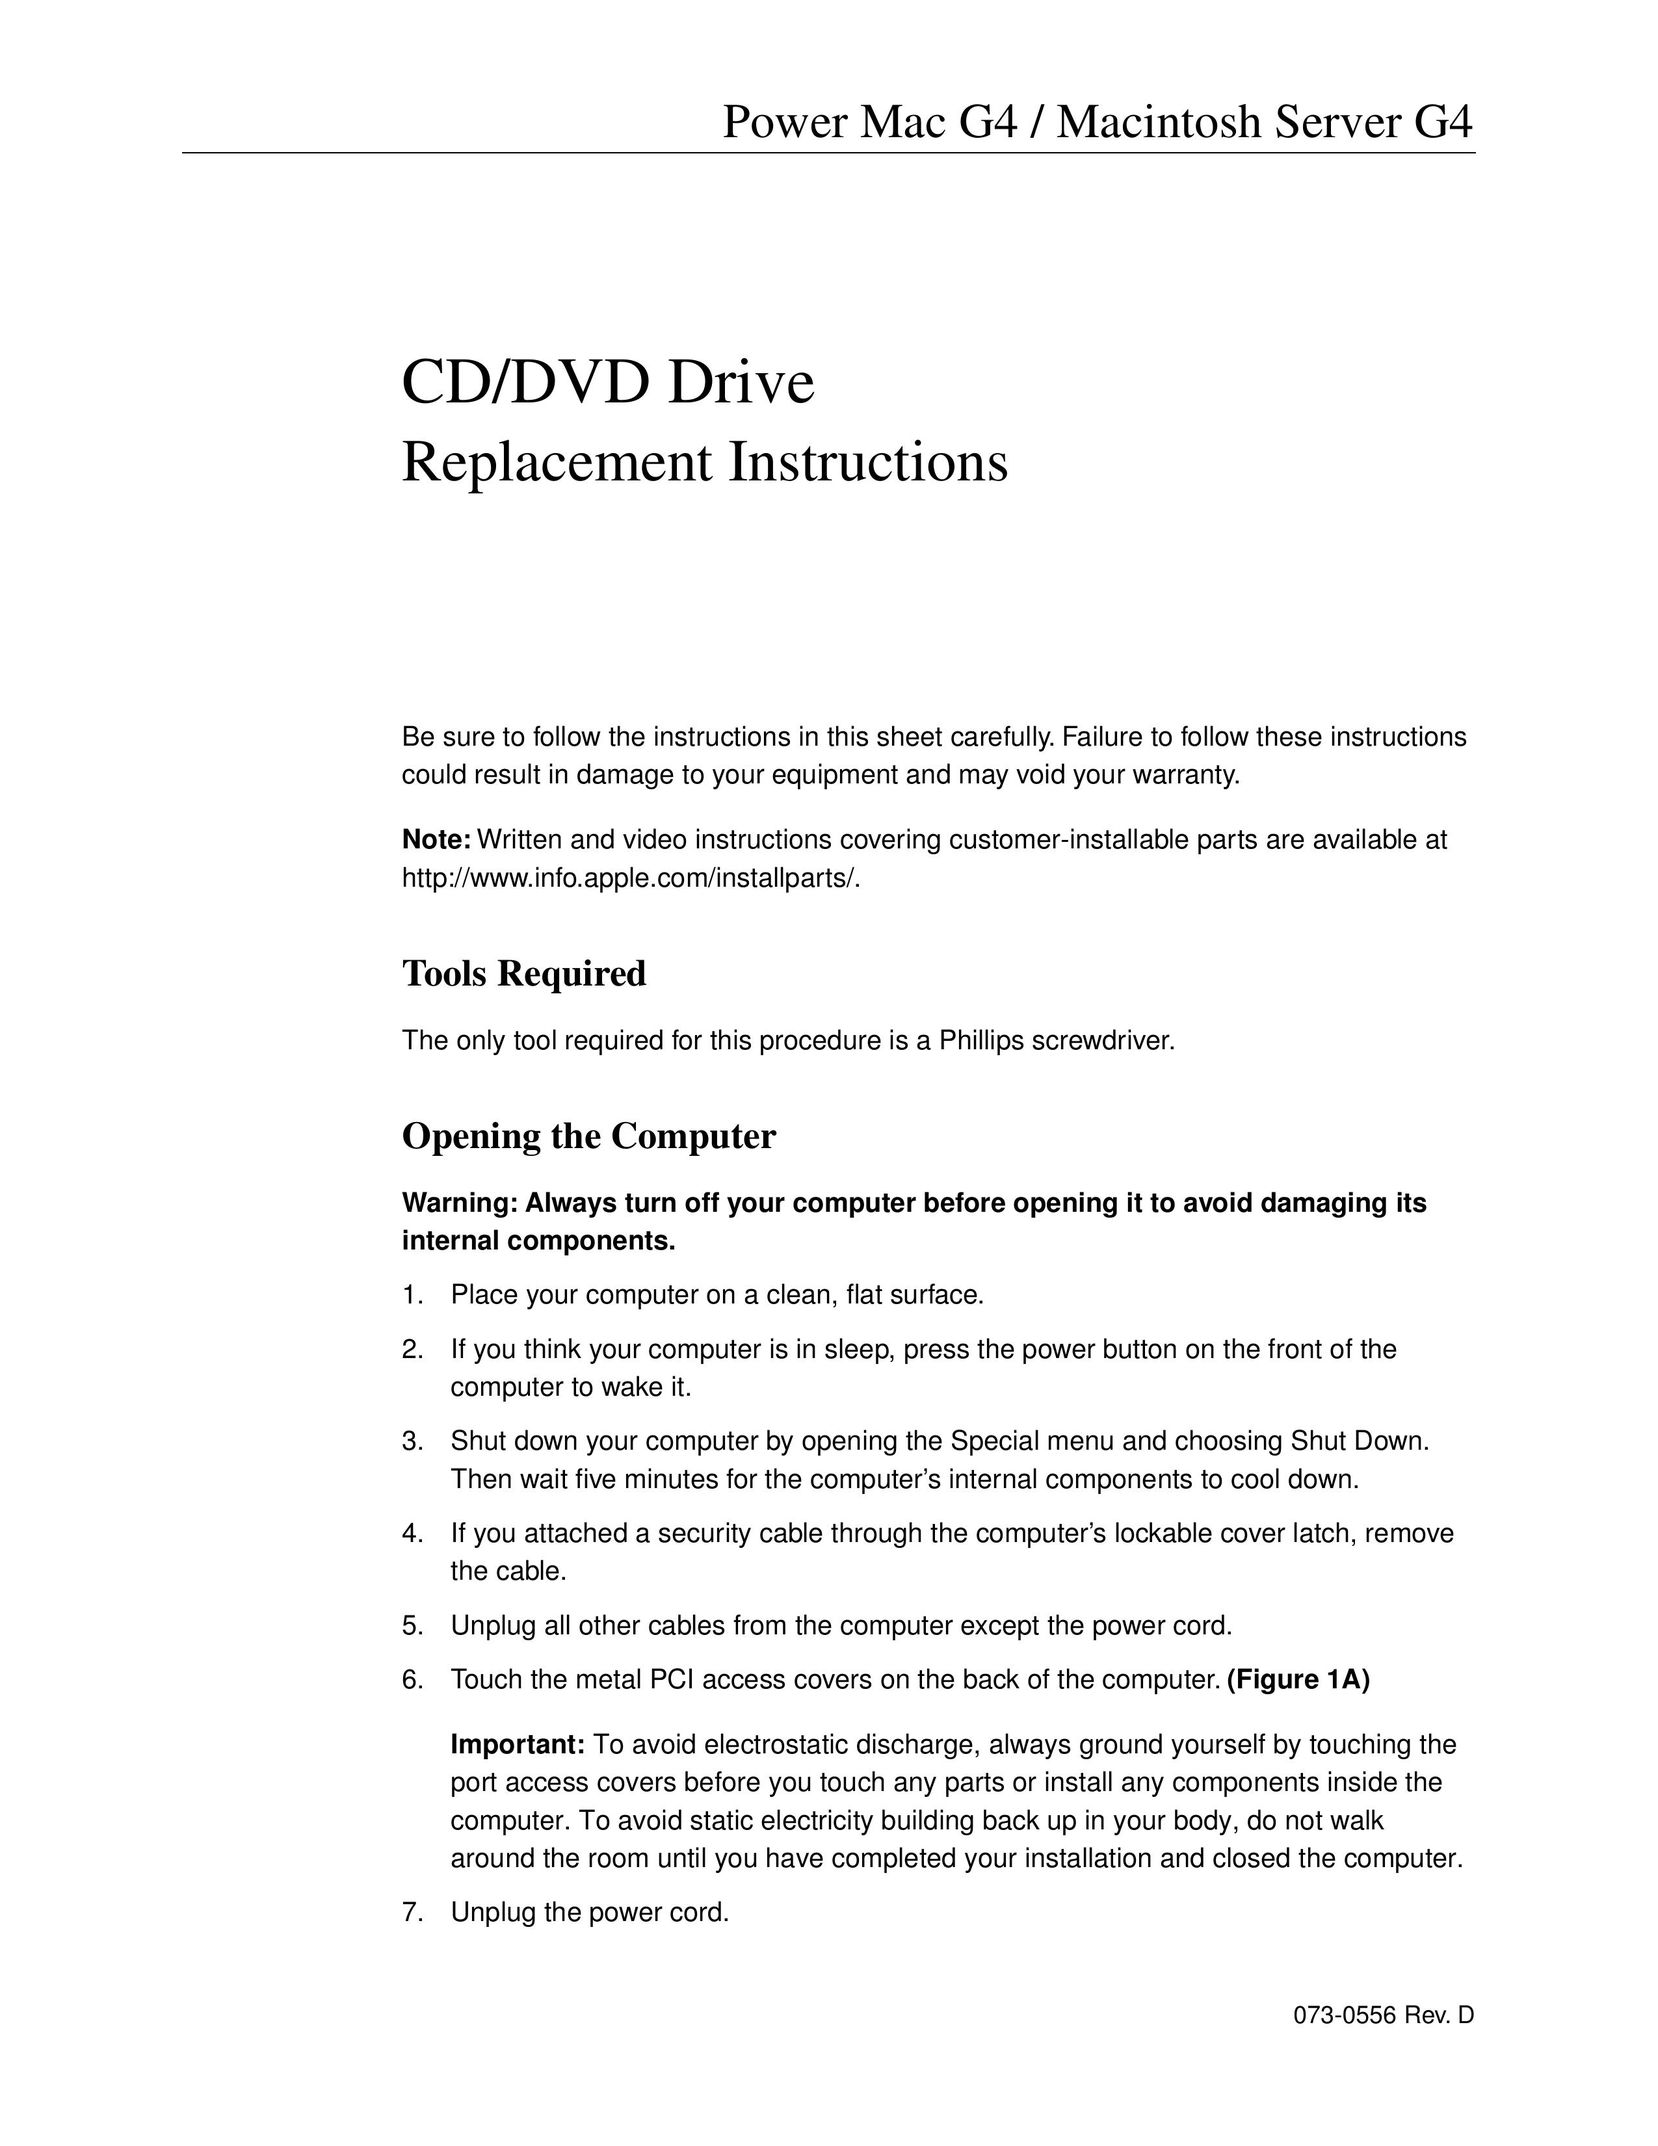 Apple CD/DVD Drive Computer Drive User Manual